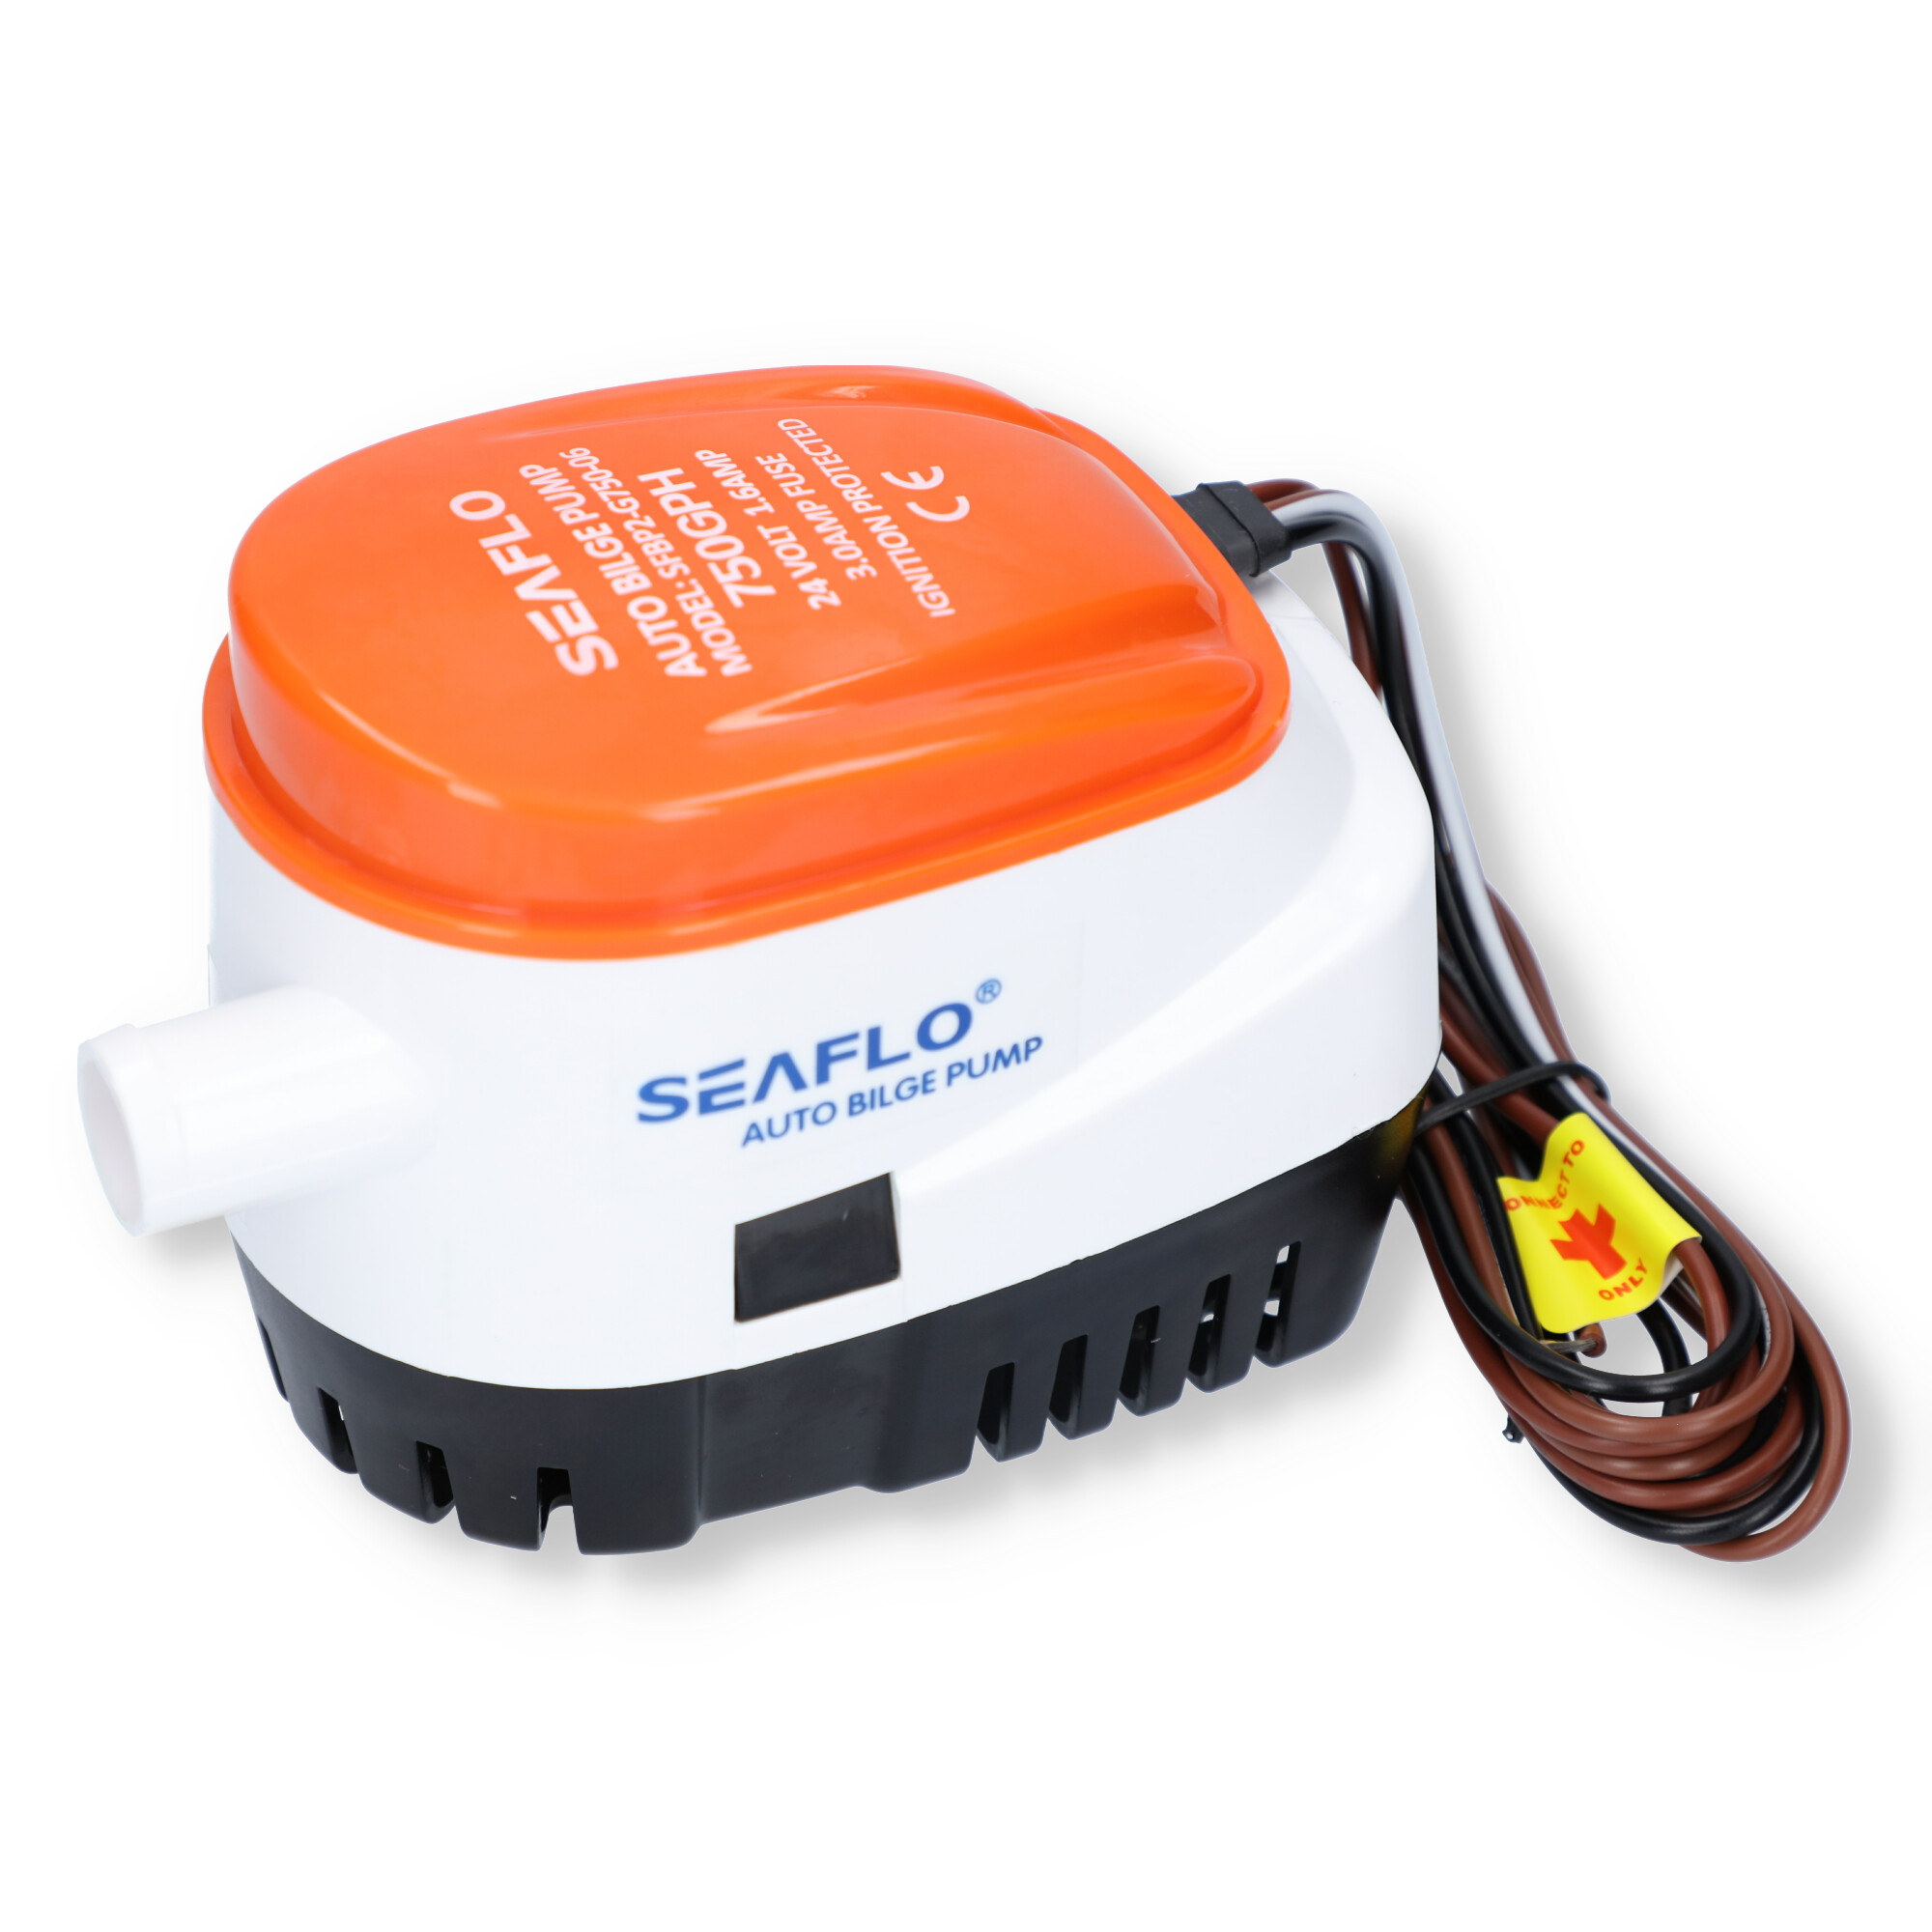 SEAFLO ® Automatik Bilge Pumpe 24V Sahara 750